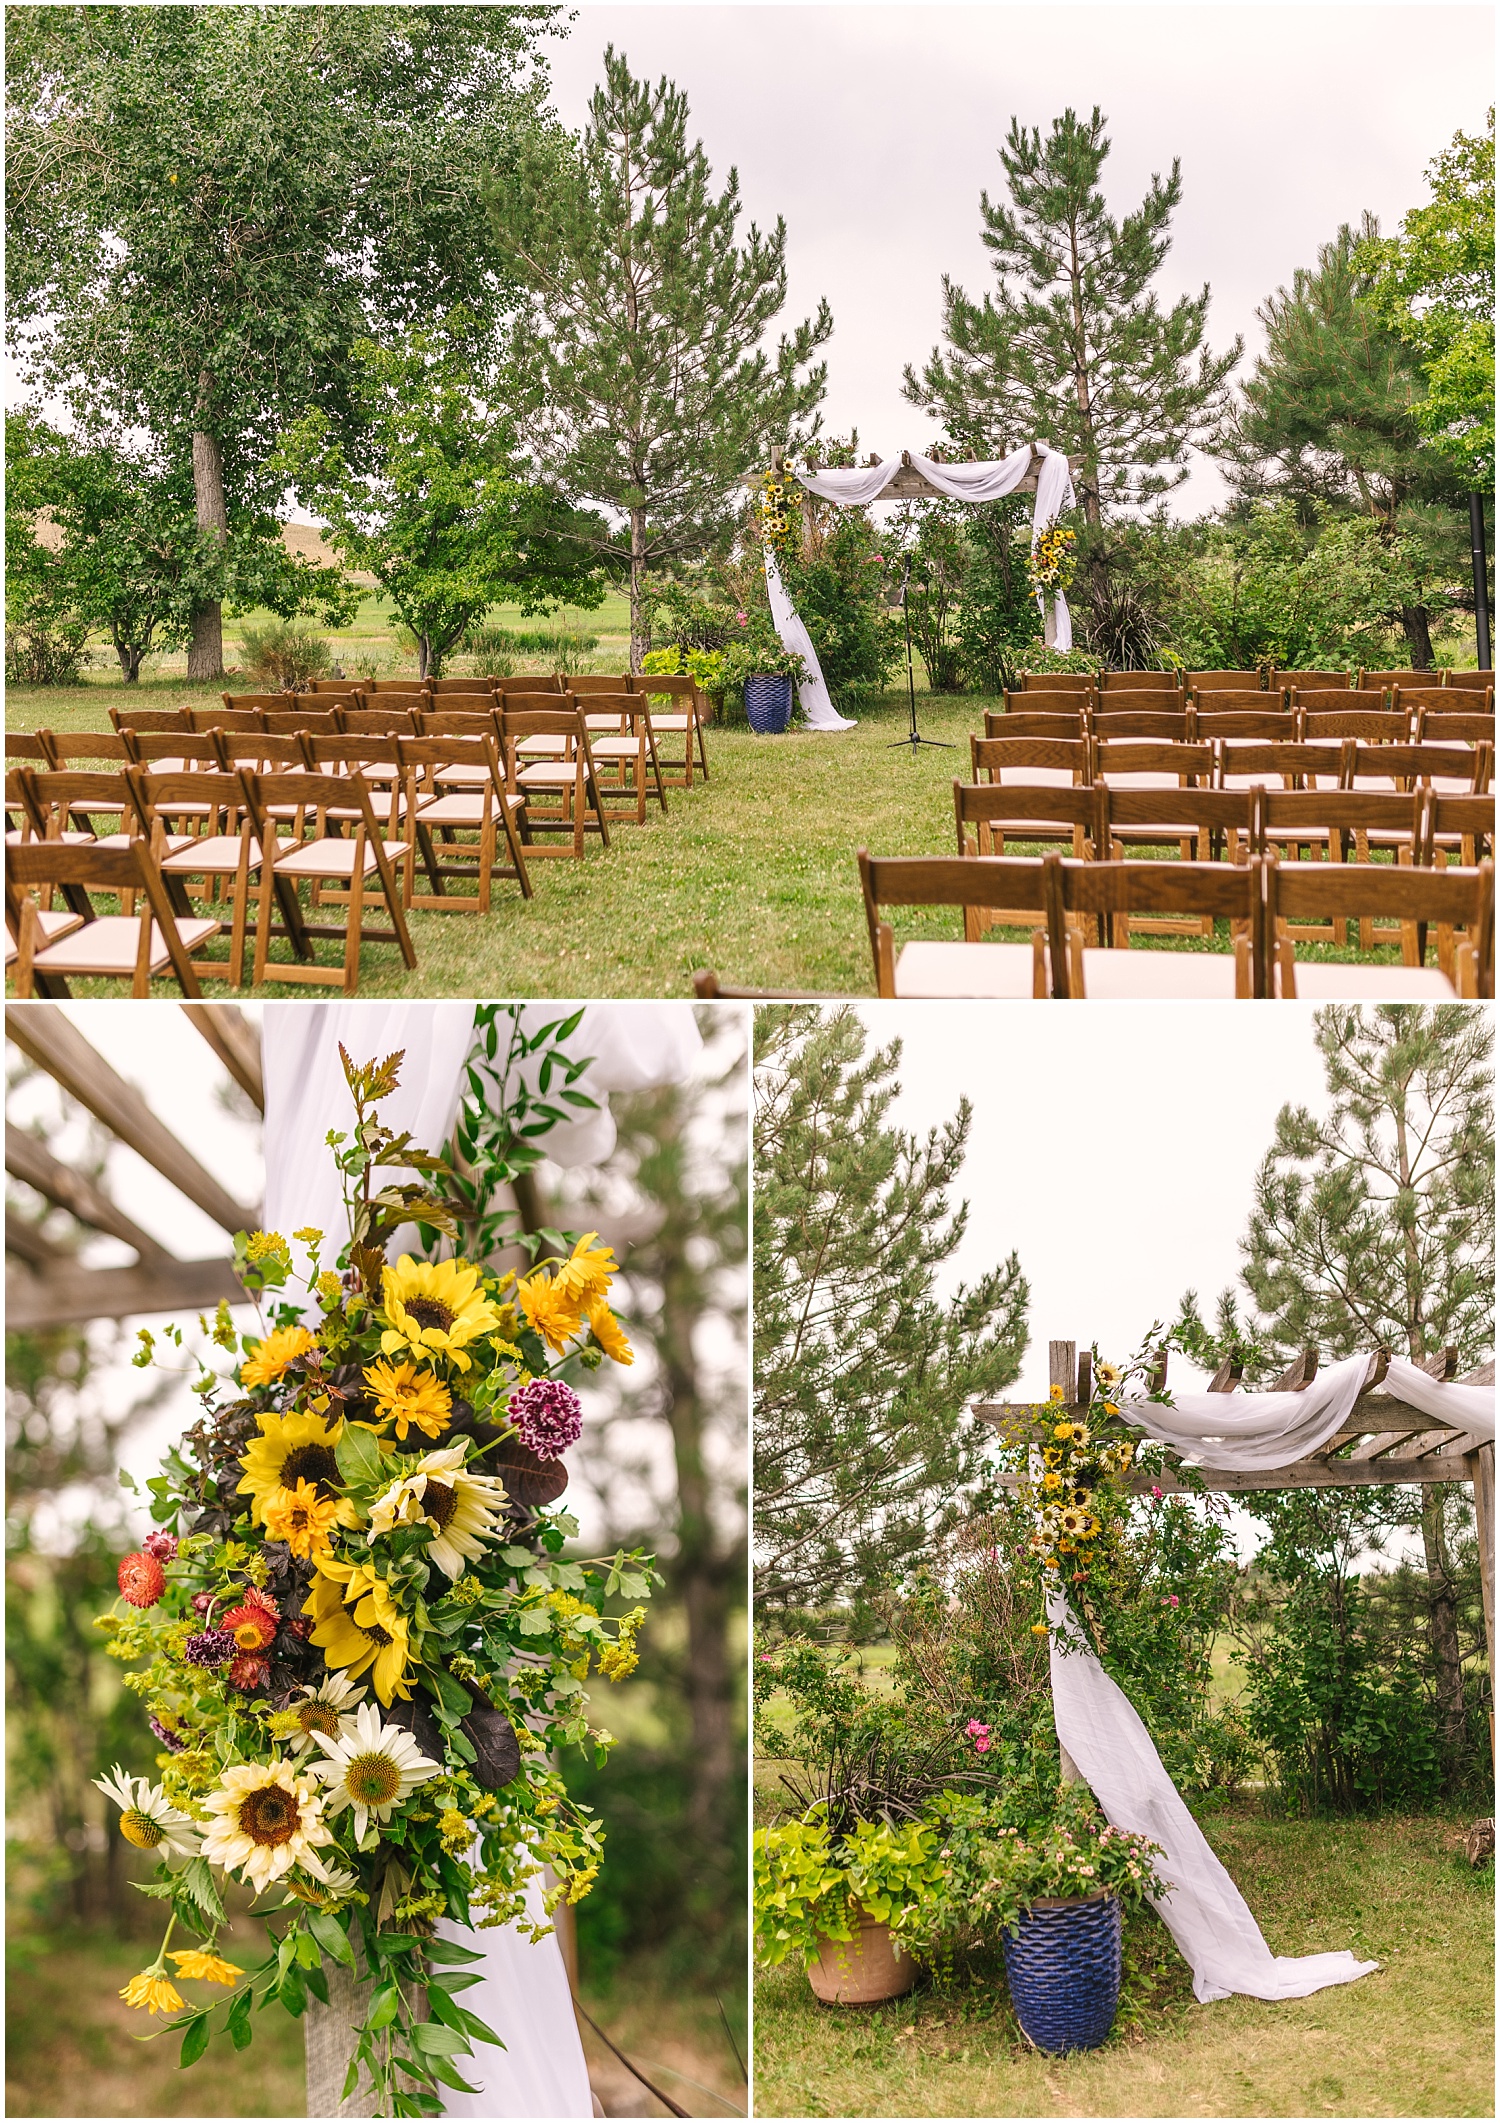 Pastures of Plenty wedding ceremony setup with flowers by Rowdy Poppy